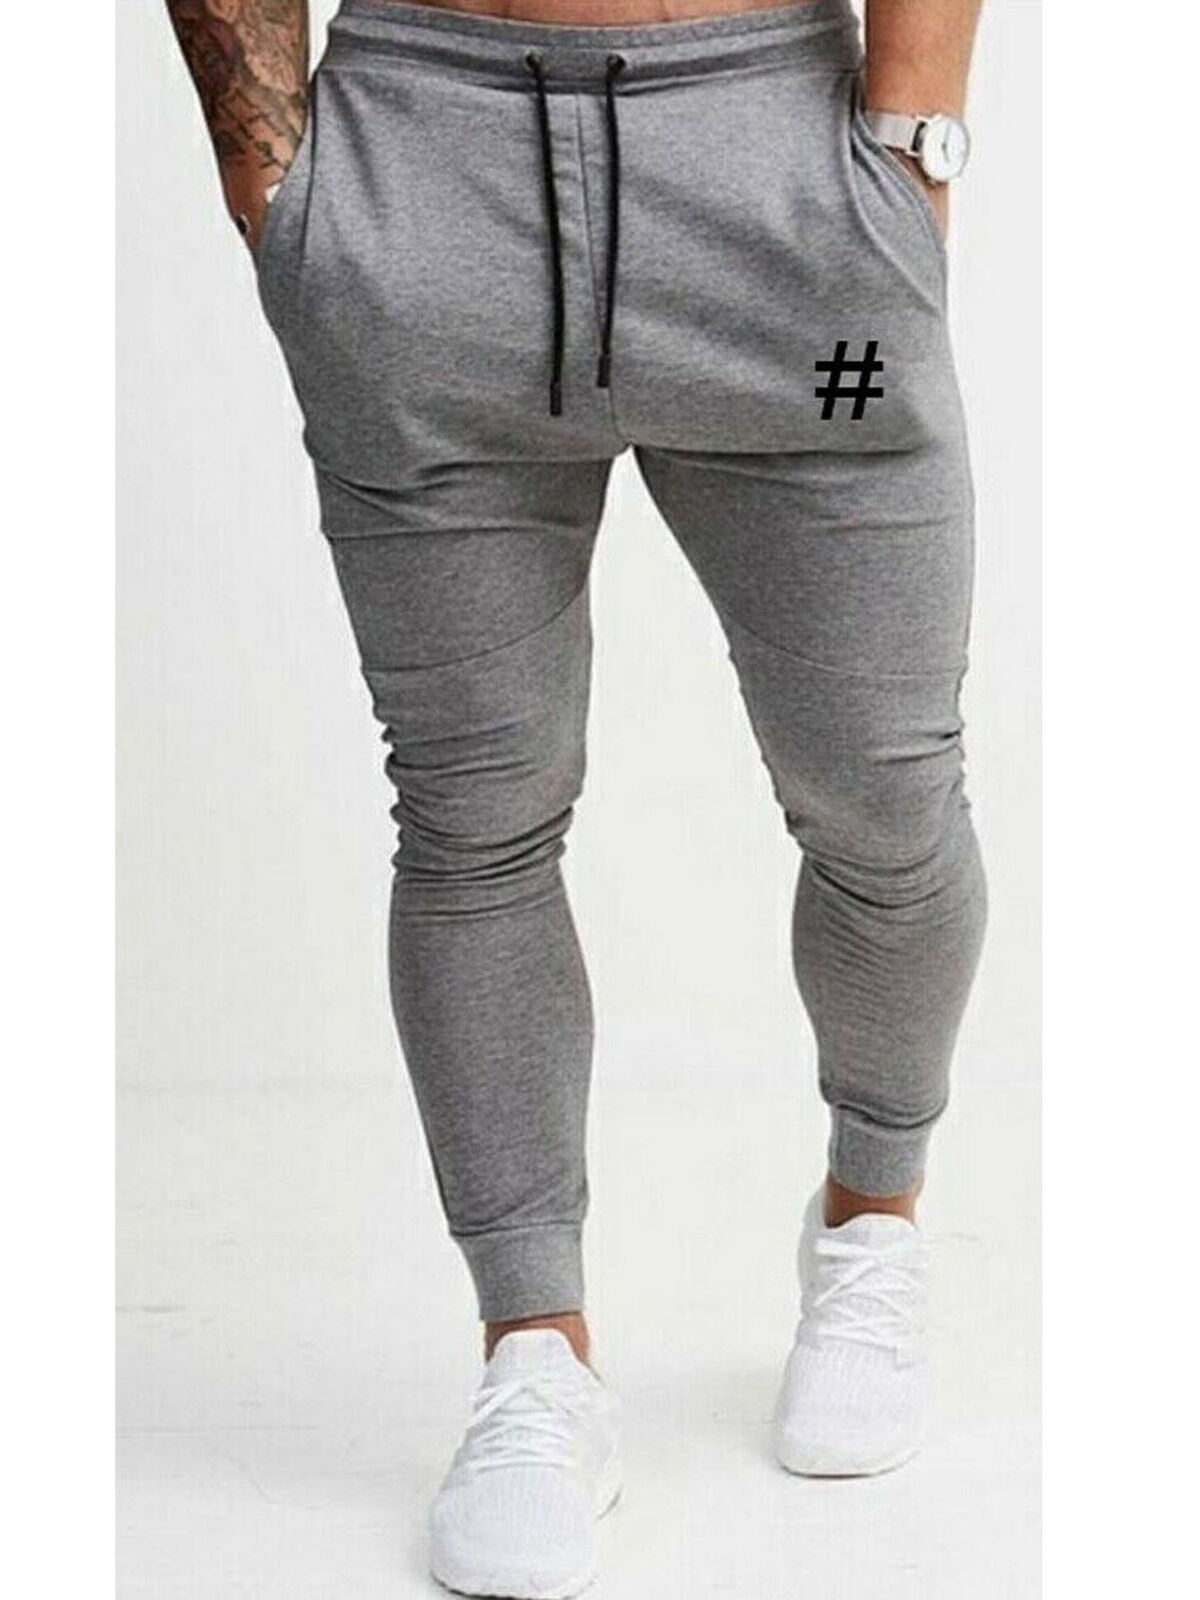 Longra Mens Trousers Men’s Boy’s Tracksuit Bottoms Sportswear Slim Fit Training Pants Running Casual Sport Pants